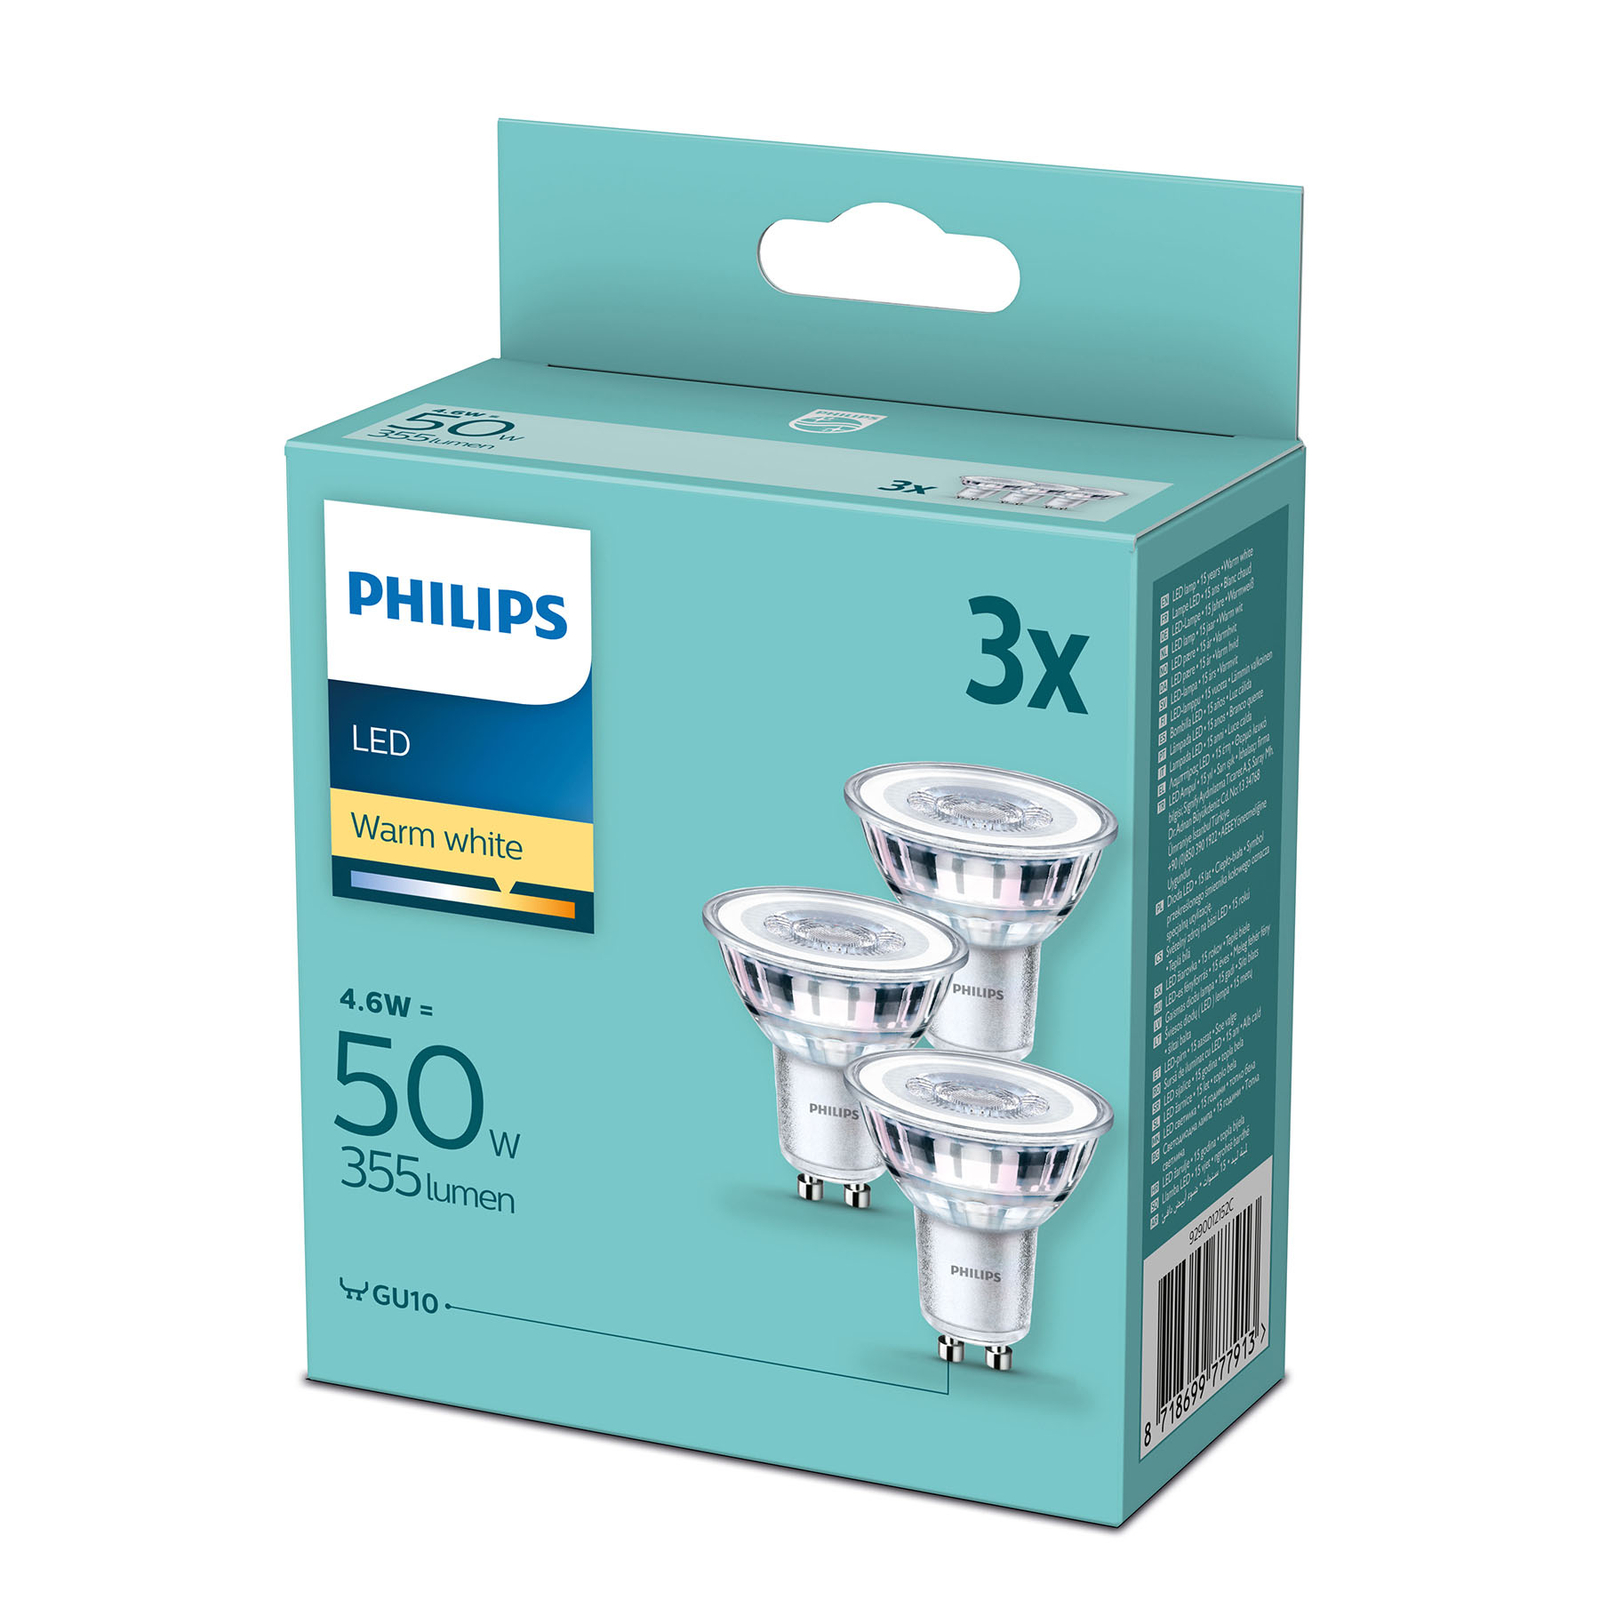 Philips LED riflettore GU10 4,6W 2.700 K, set 3x